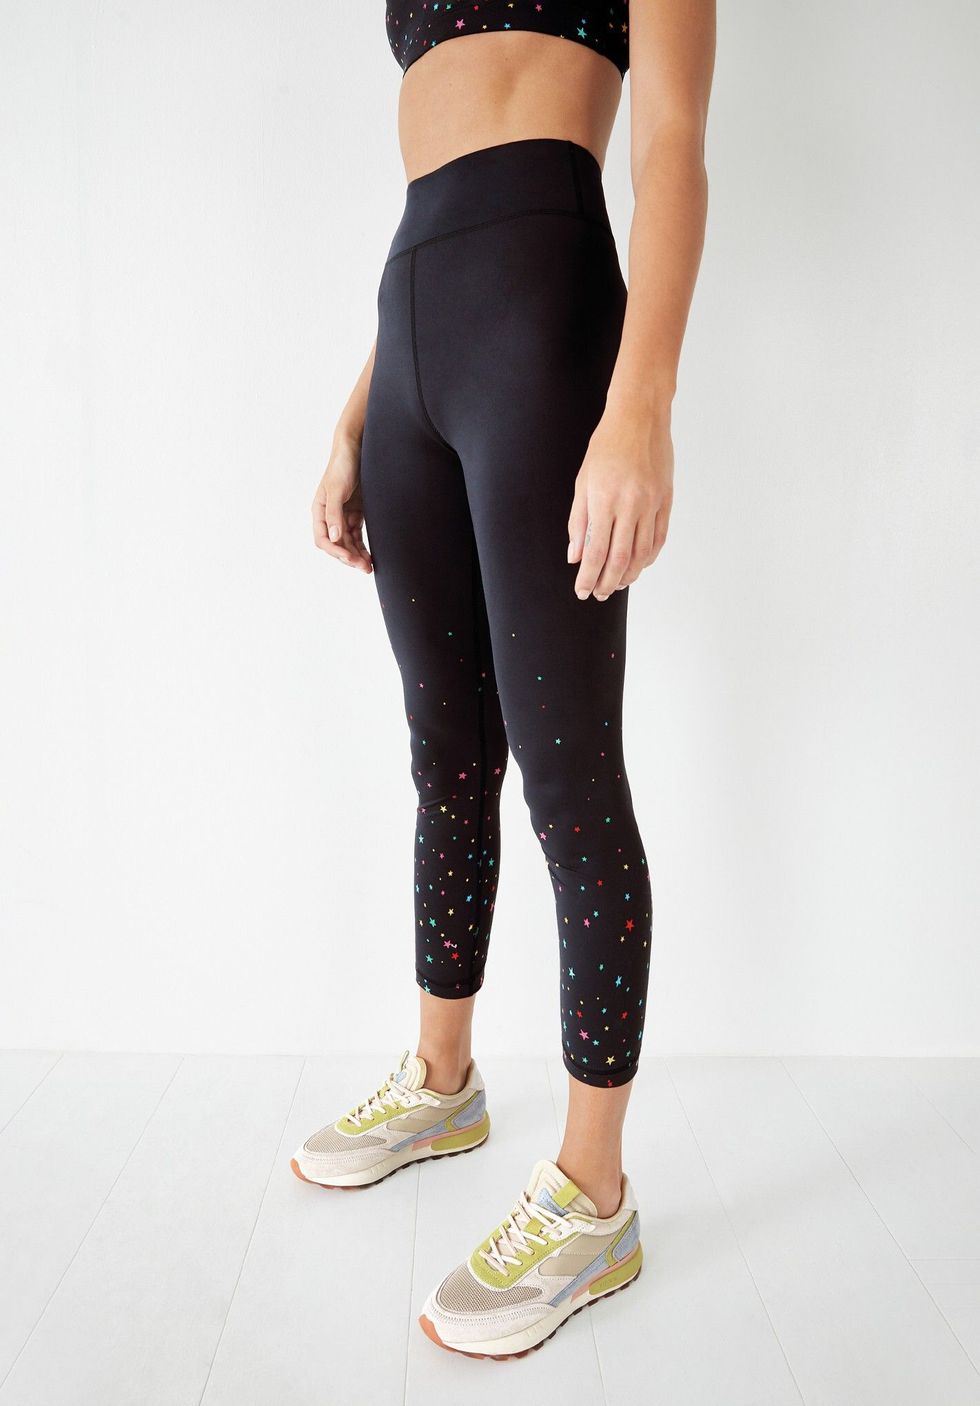 Augper Women's Christmas Running Printing Elasticity Pants Workout